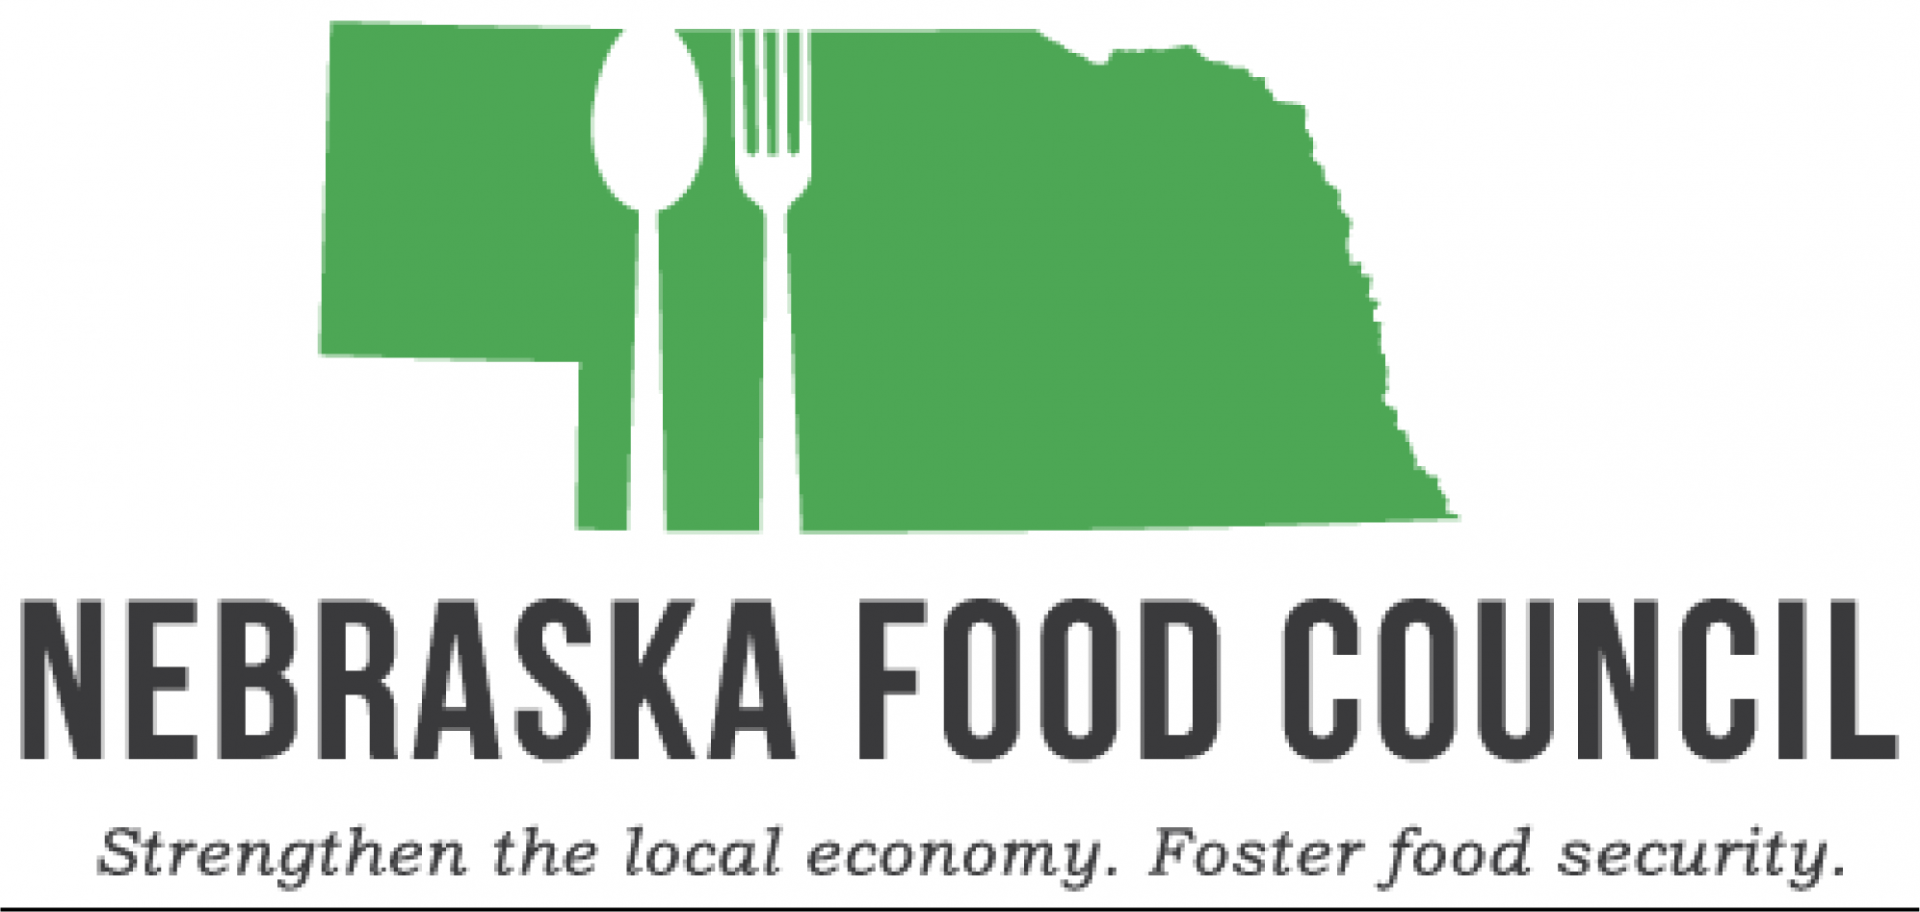 Nebraska Food Council